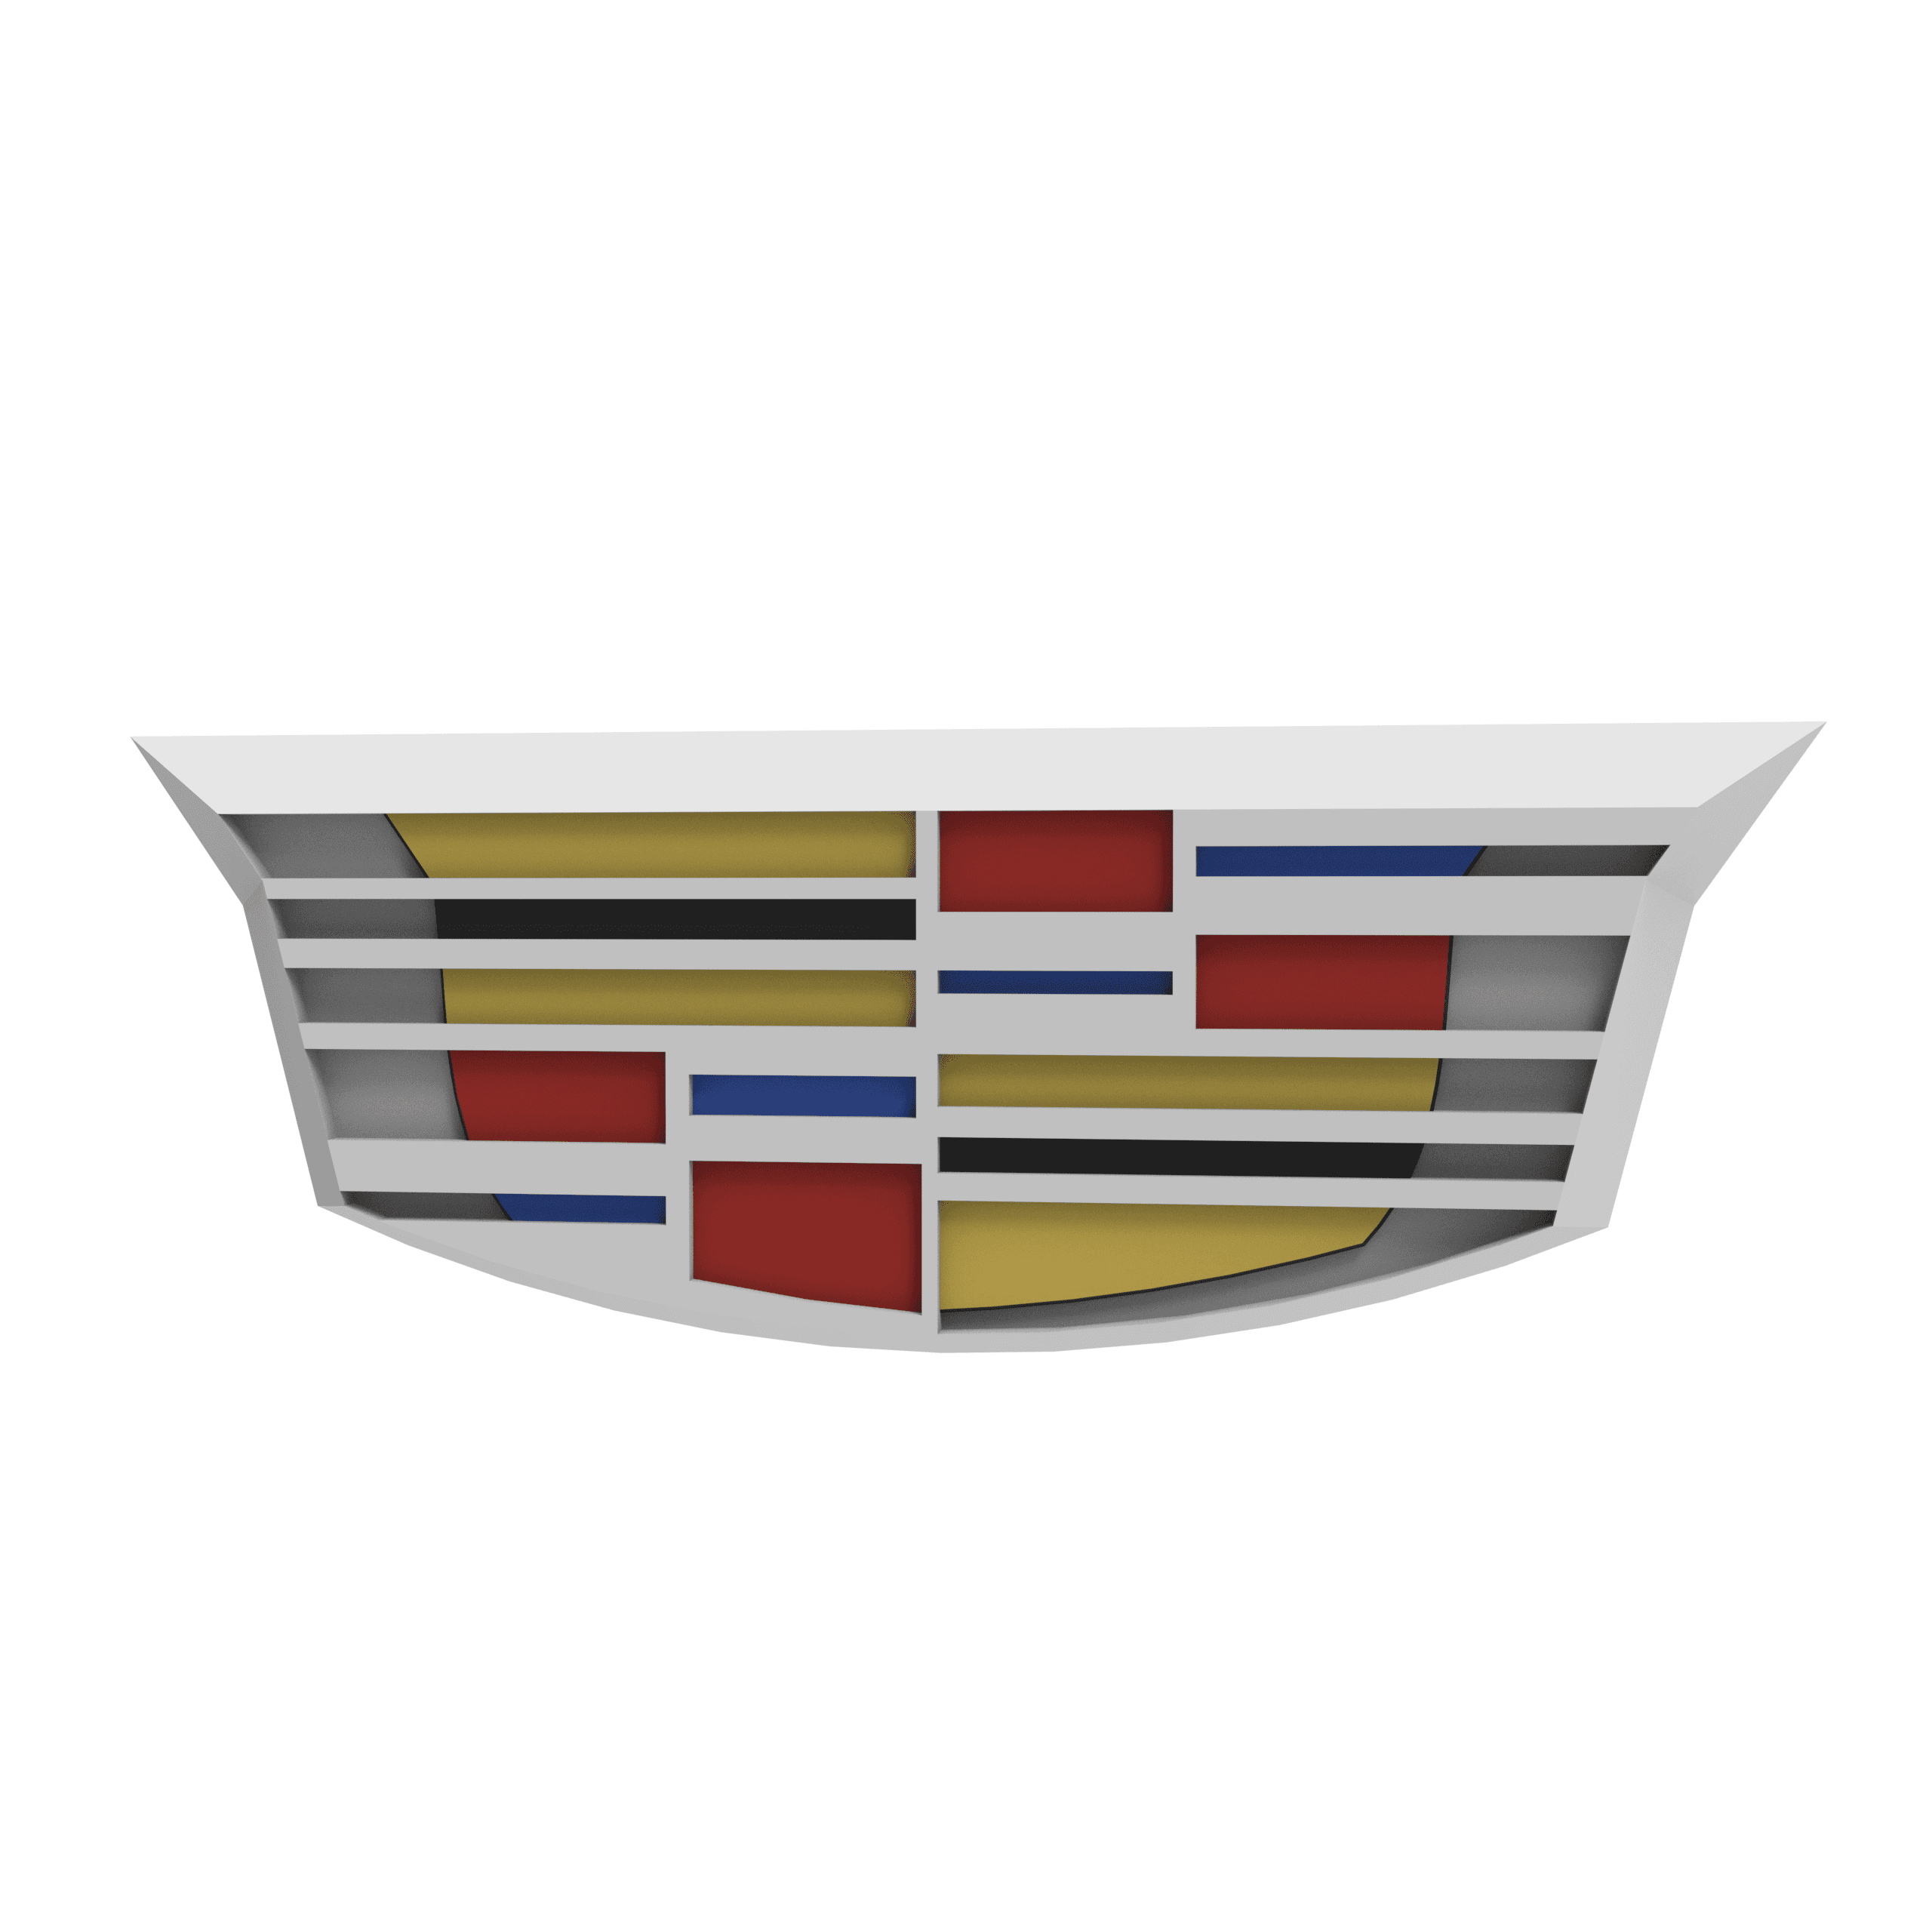 Cadillac logo 3d model